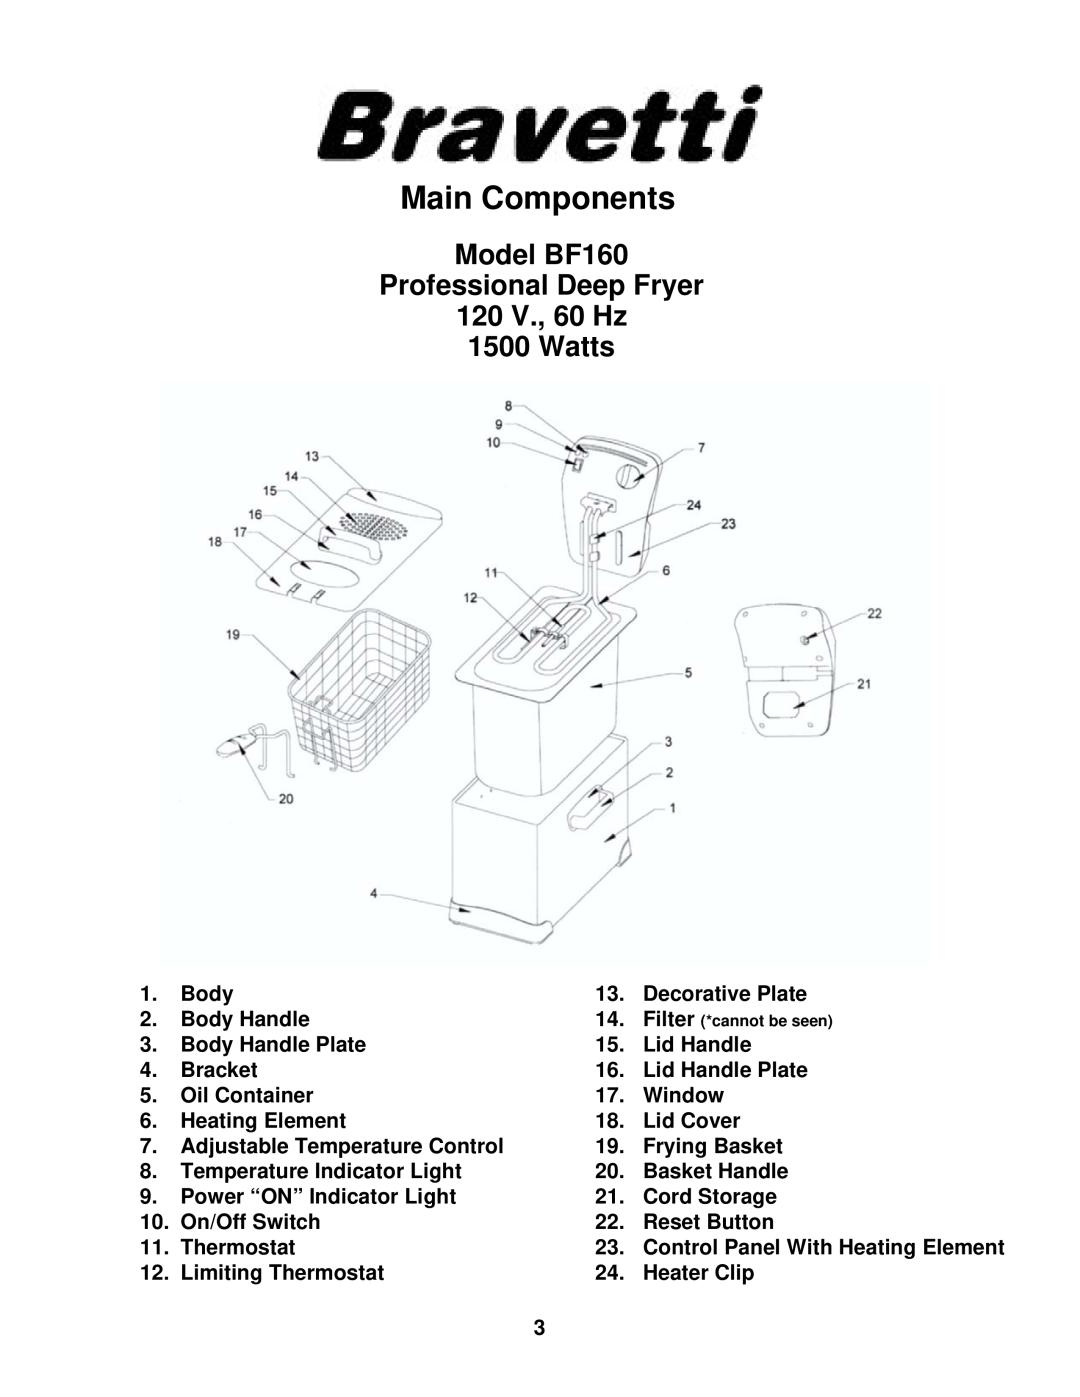 Euro-Pro manual Main Components, Model BF160 Professional Deep Fryer 120 V., 60 Hz, Watts 